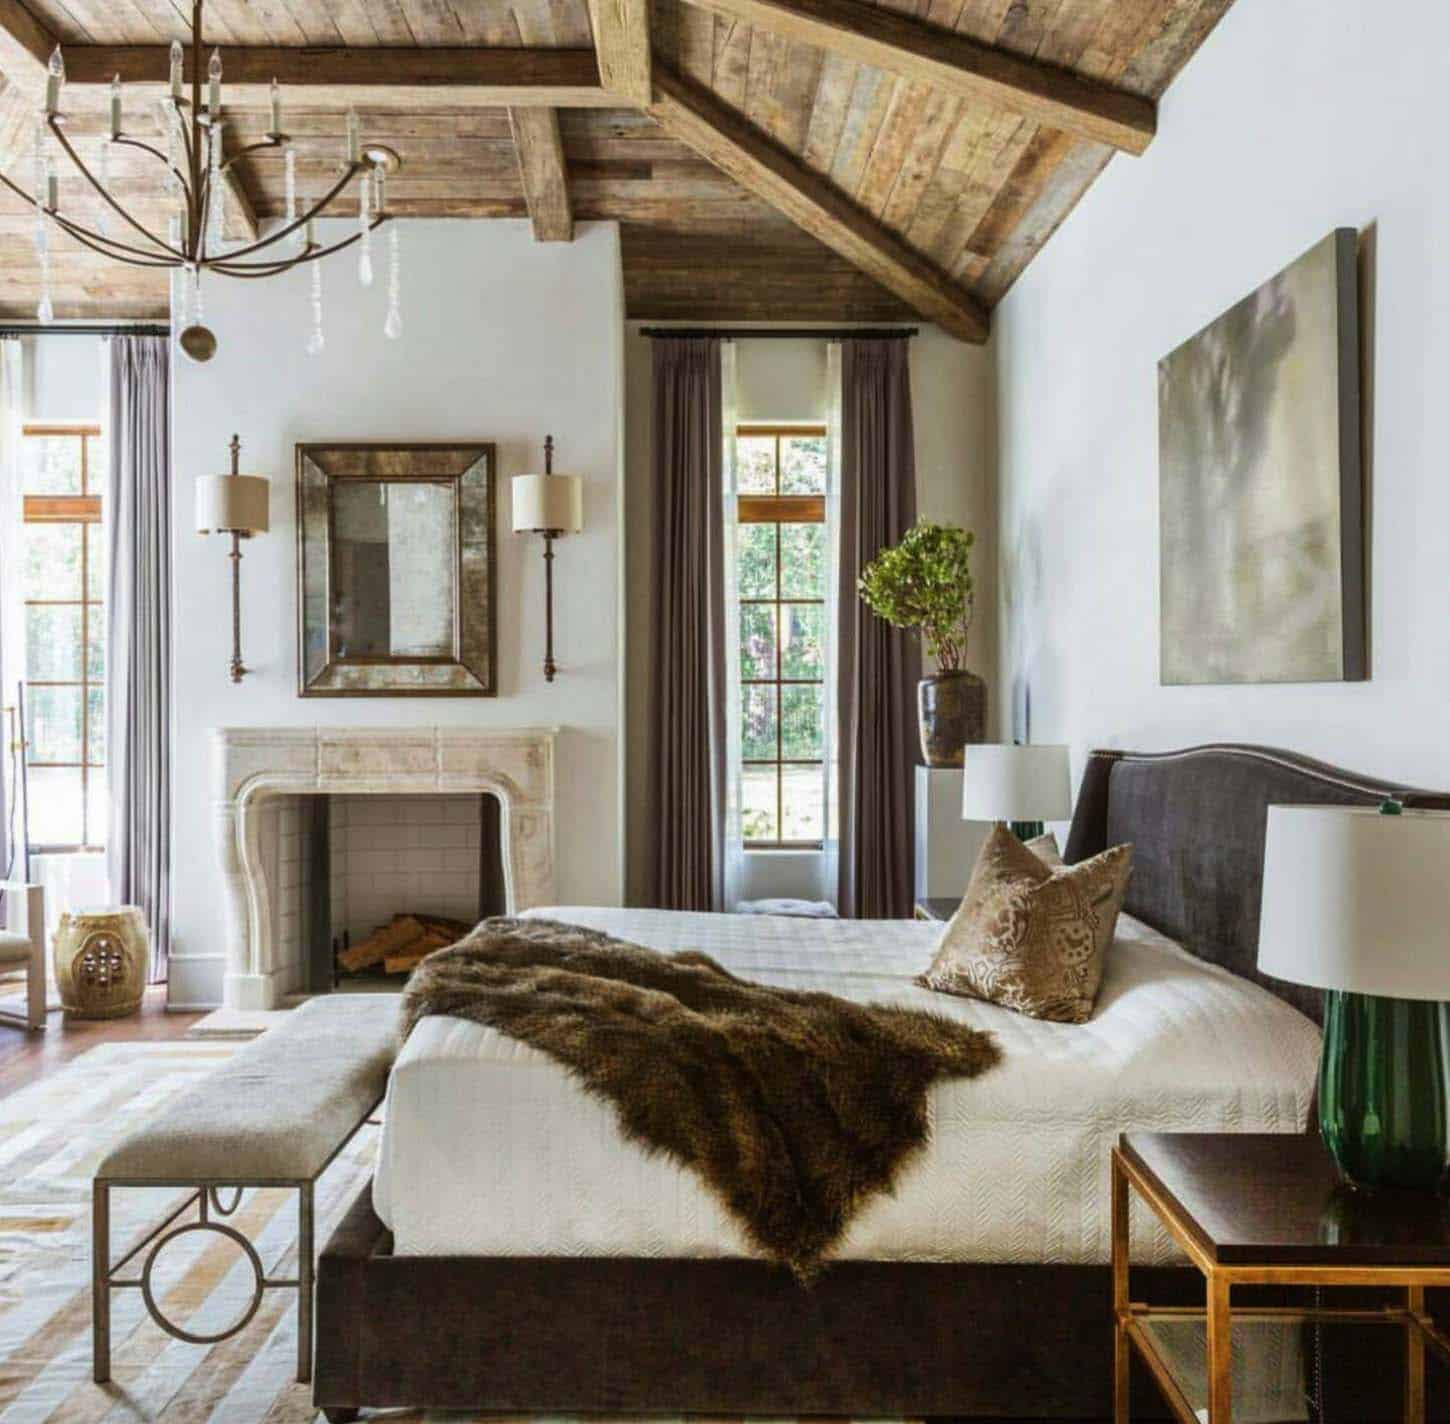 Farmhouse Master Bedroom Ideas
 25 Absolutely breathtaking farmhouse style bedroom ideas